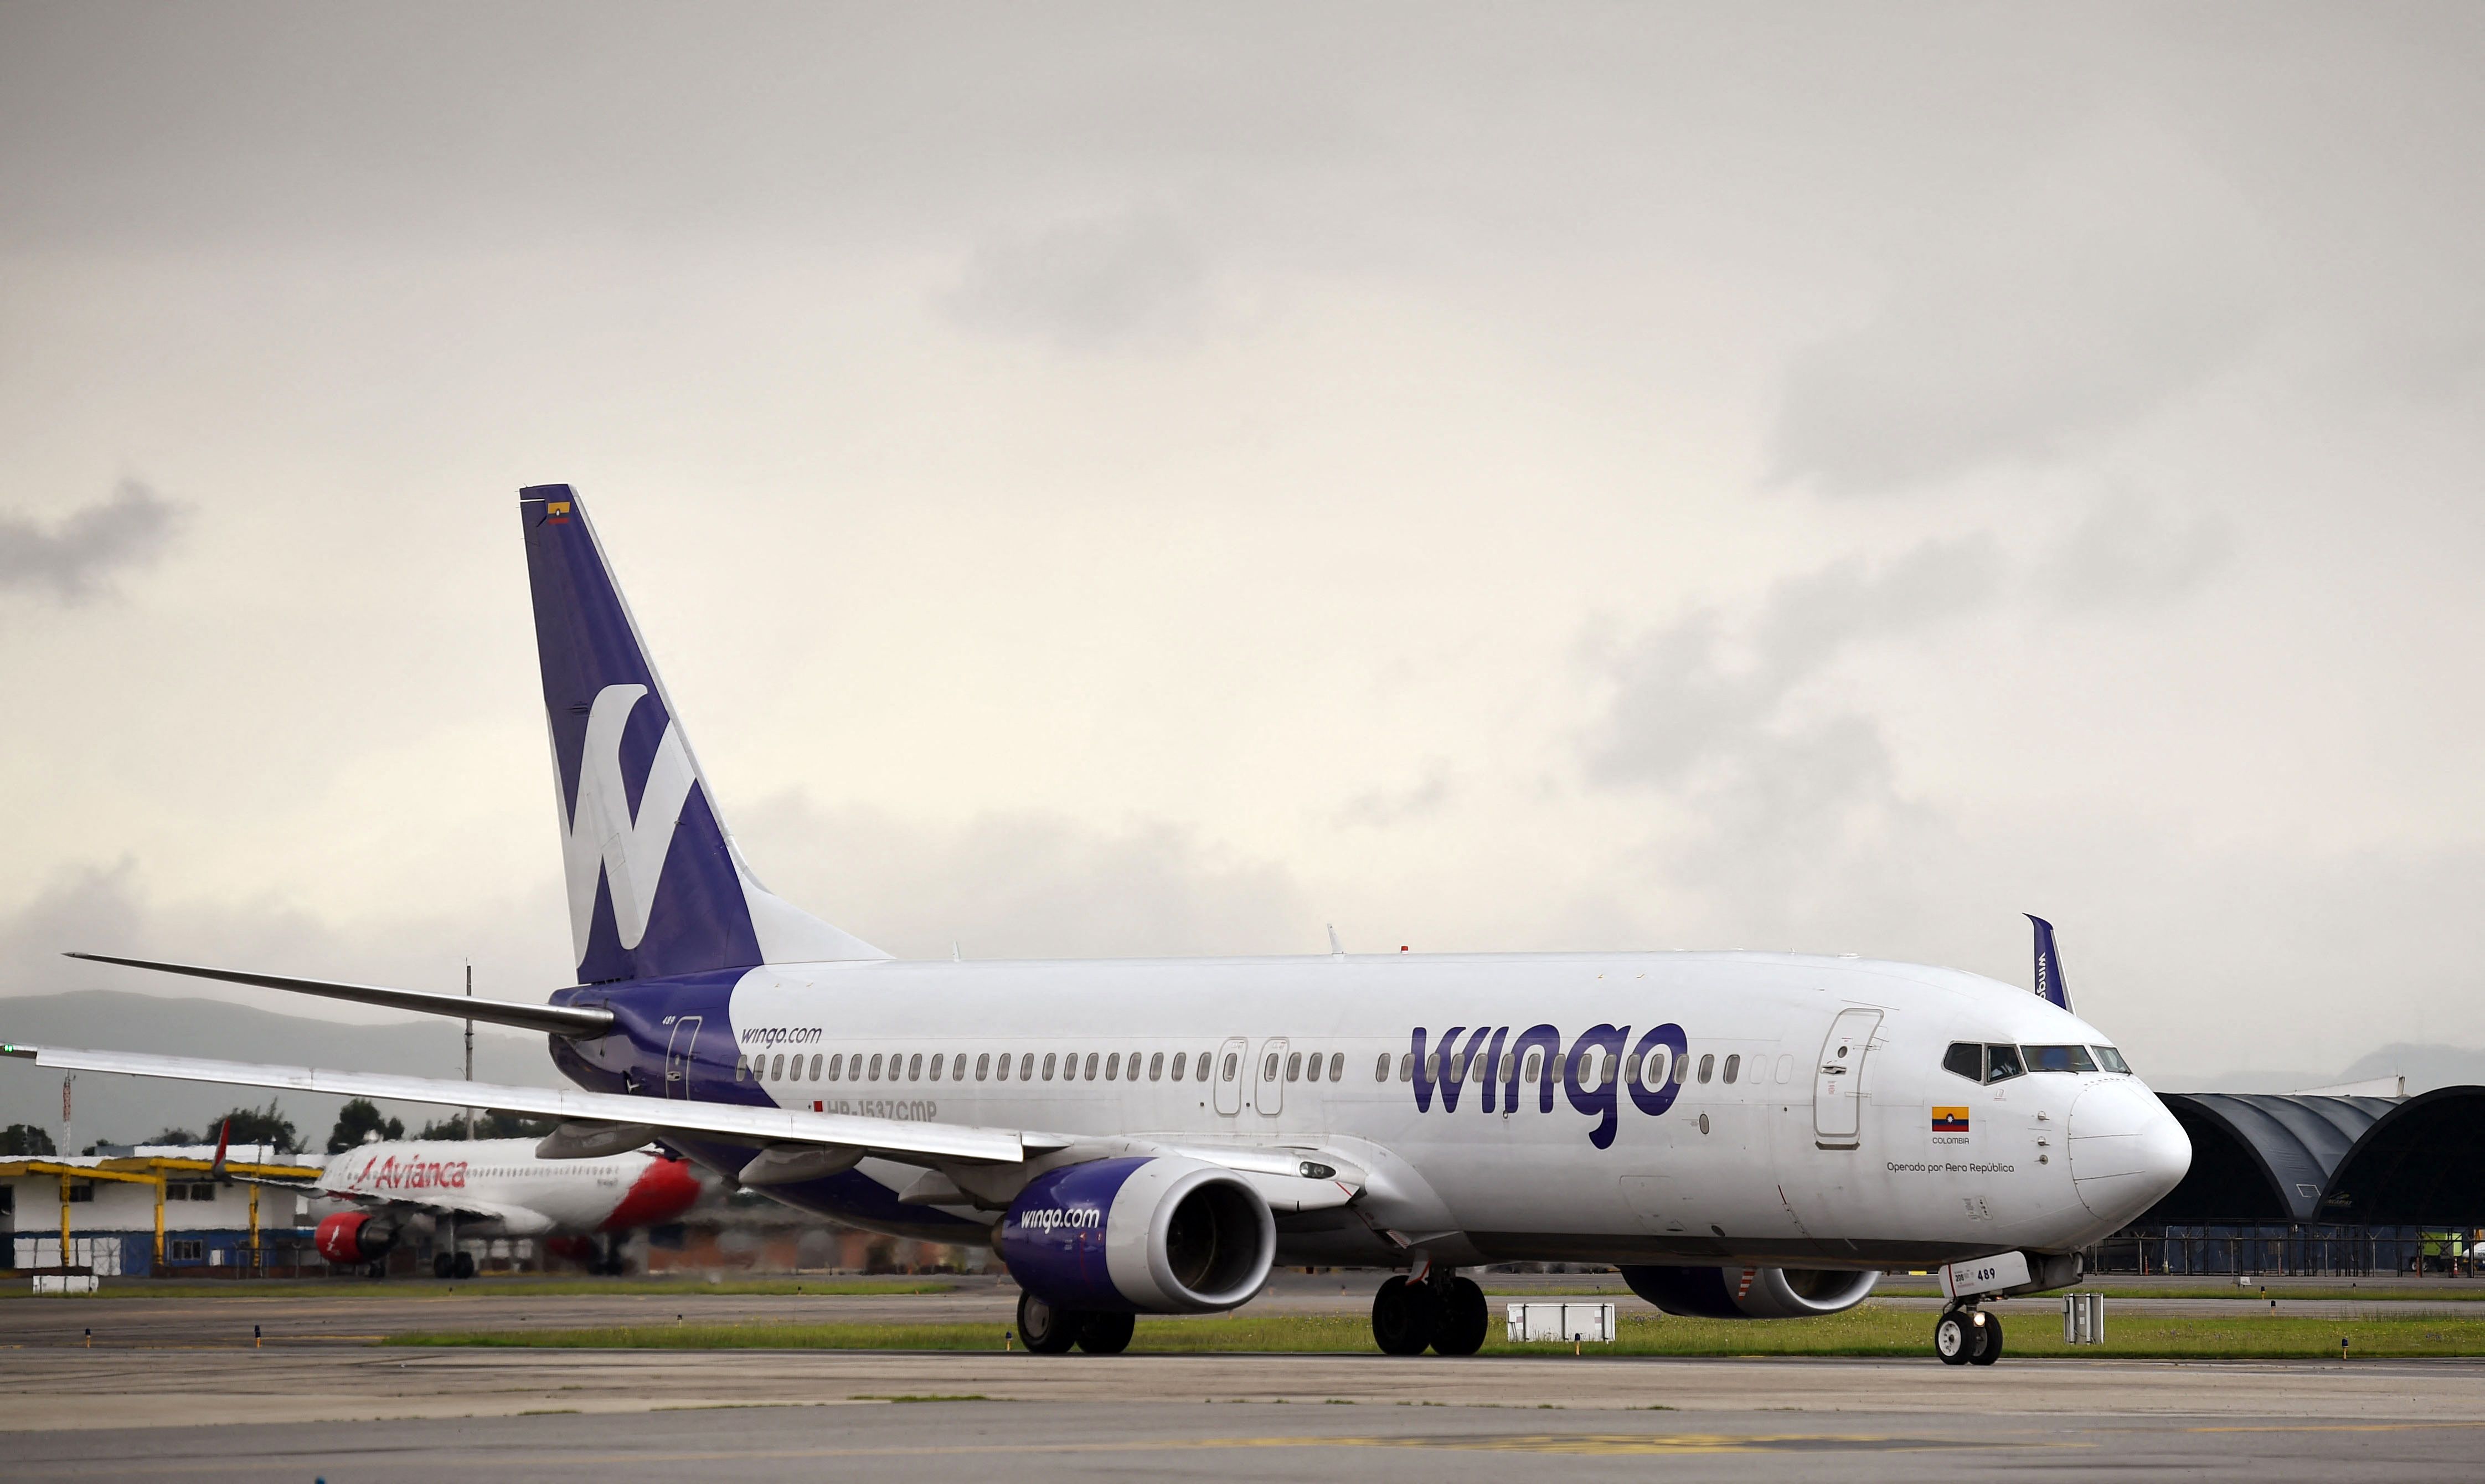 A Wingo plane taxis at El Dorado International Airport in Bogota, on May 14, 2022.